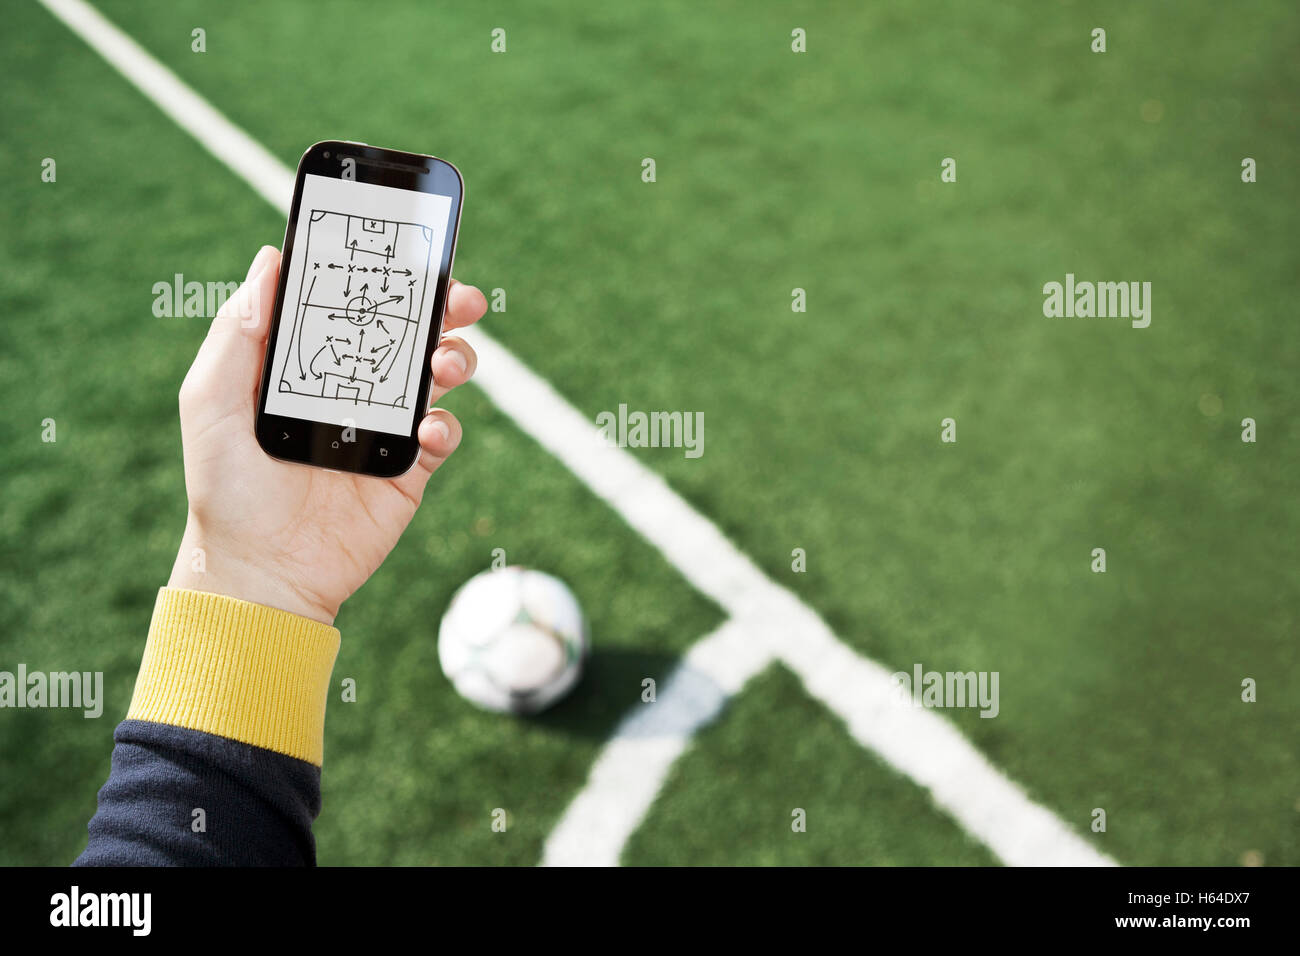 Mano sujetando smart phone con match tácticas en campo de fútbol Foto de stock